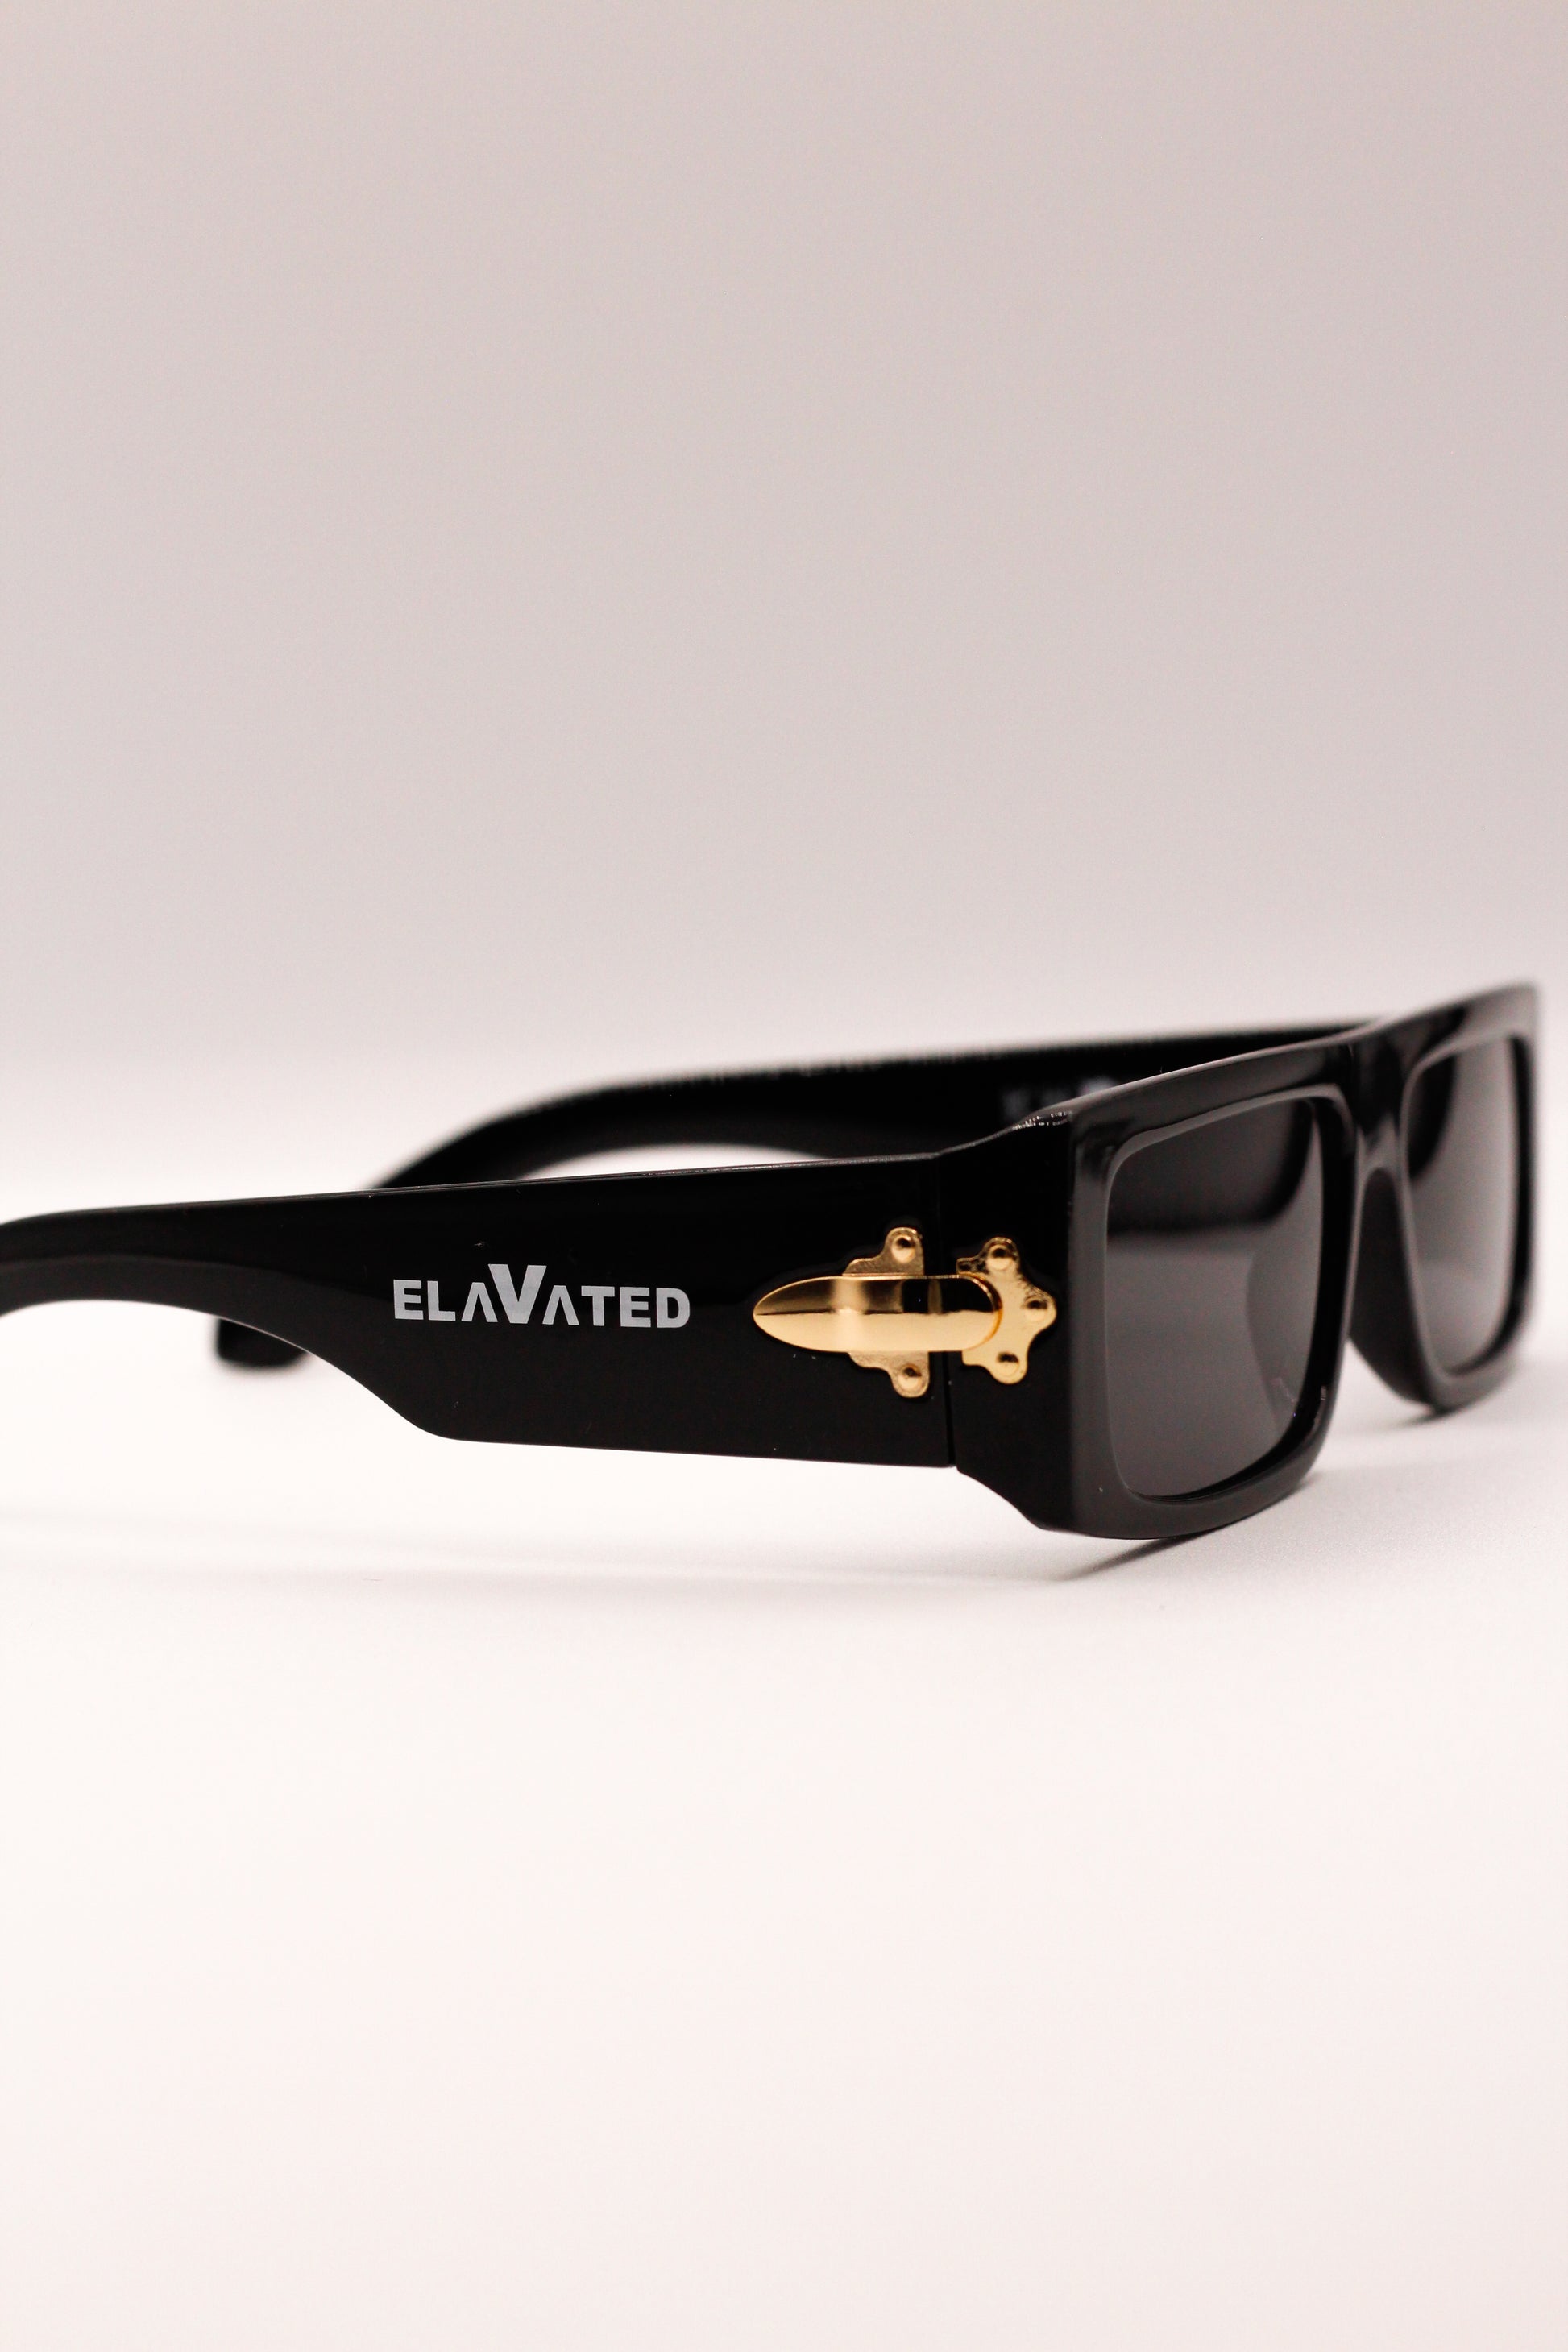 Matrix Elevated Sunglasses